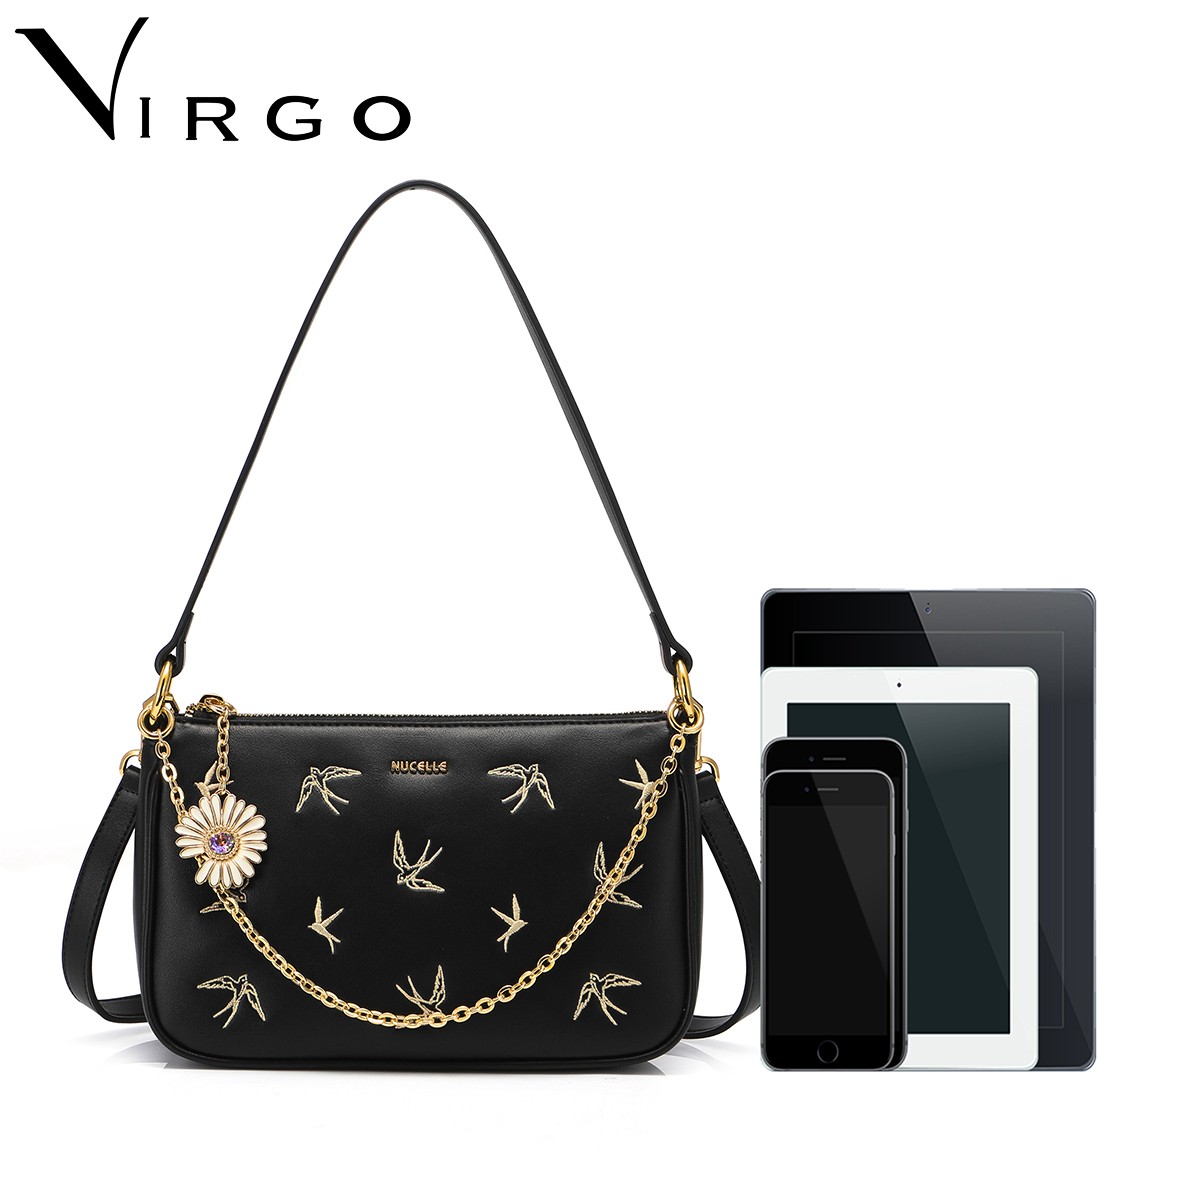 Túi đeo chéo nữ thời trang Nucelle Virgo VG684